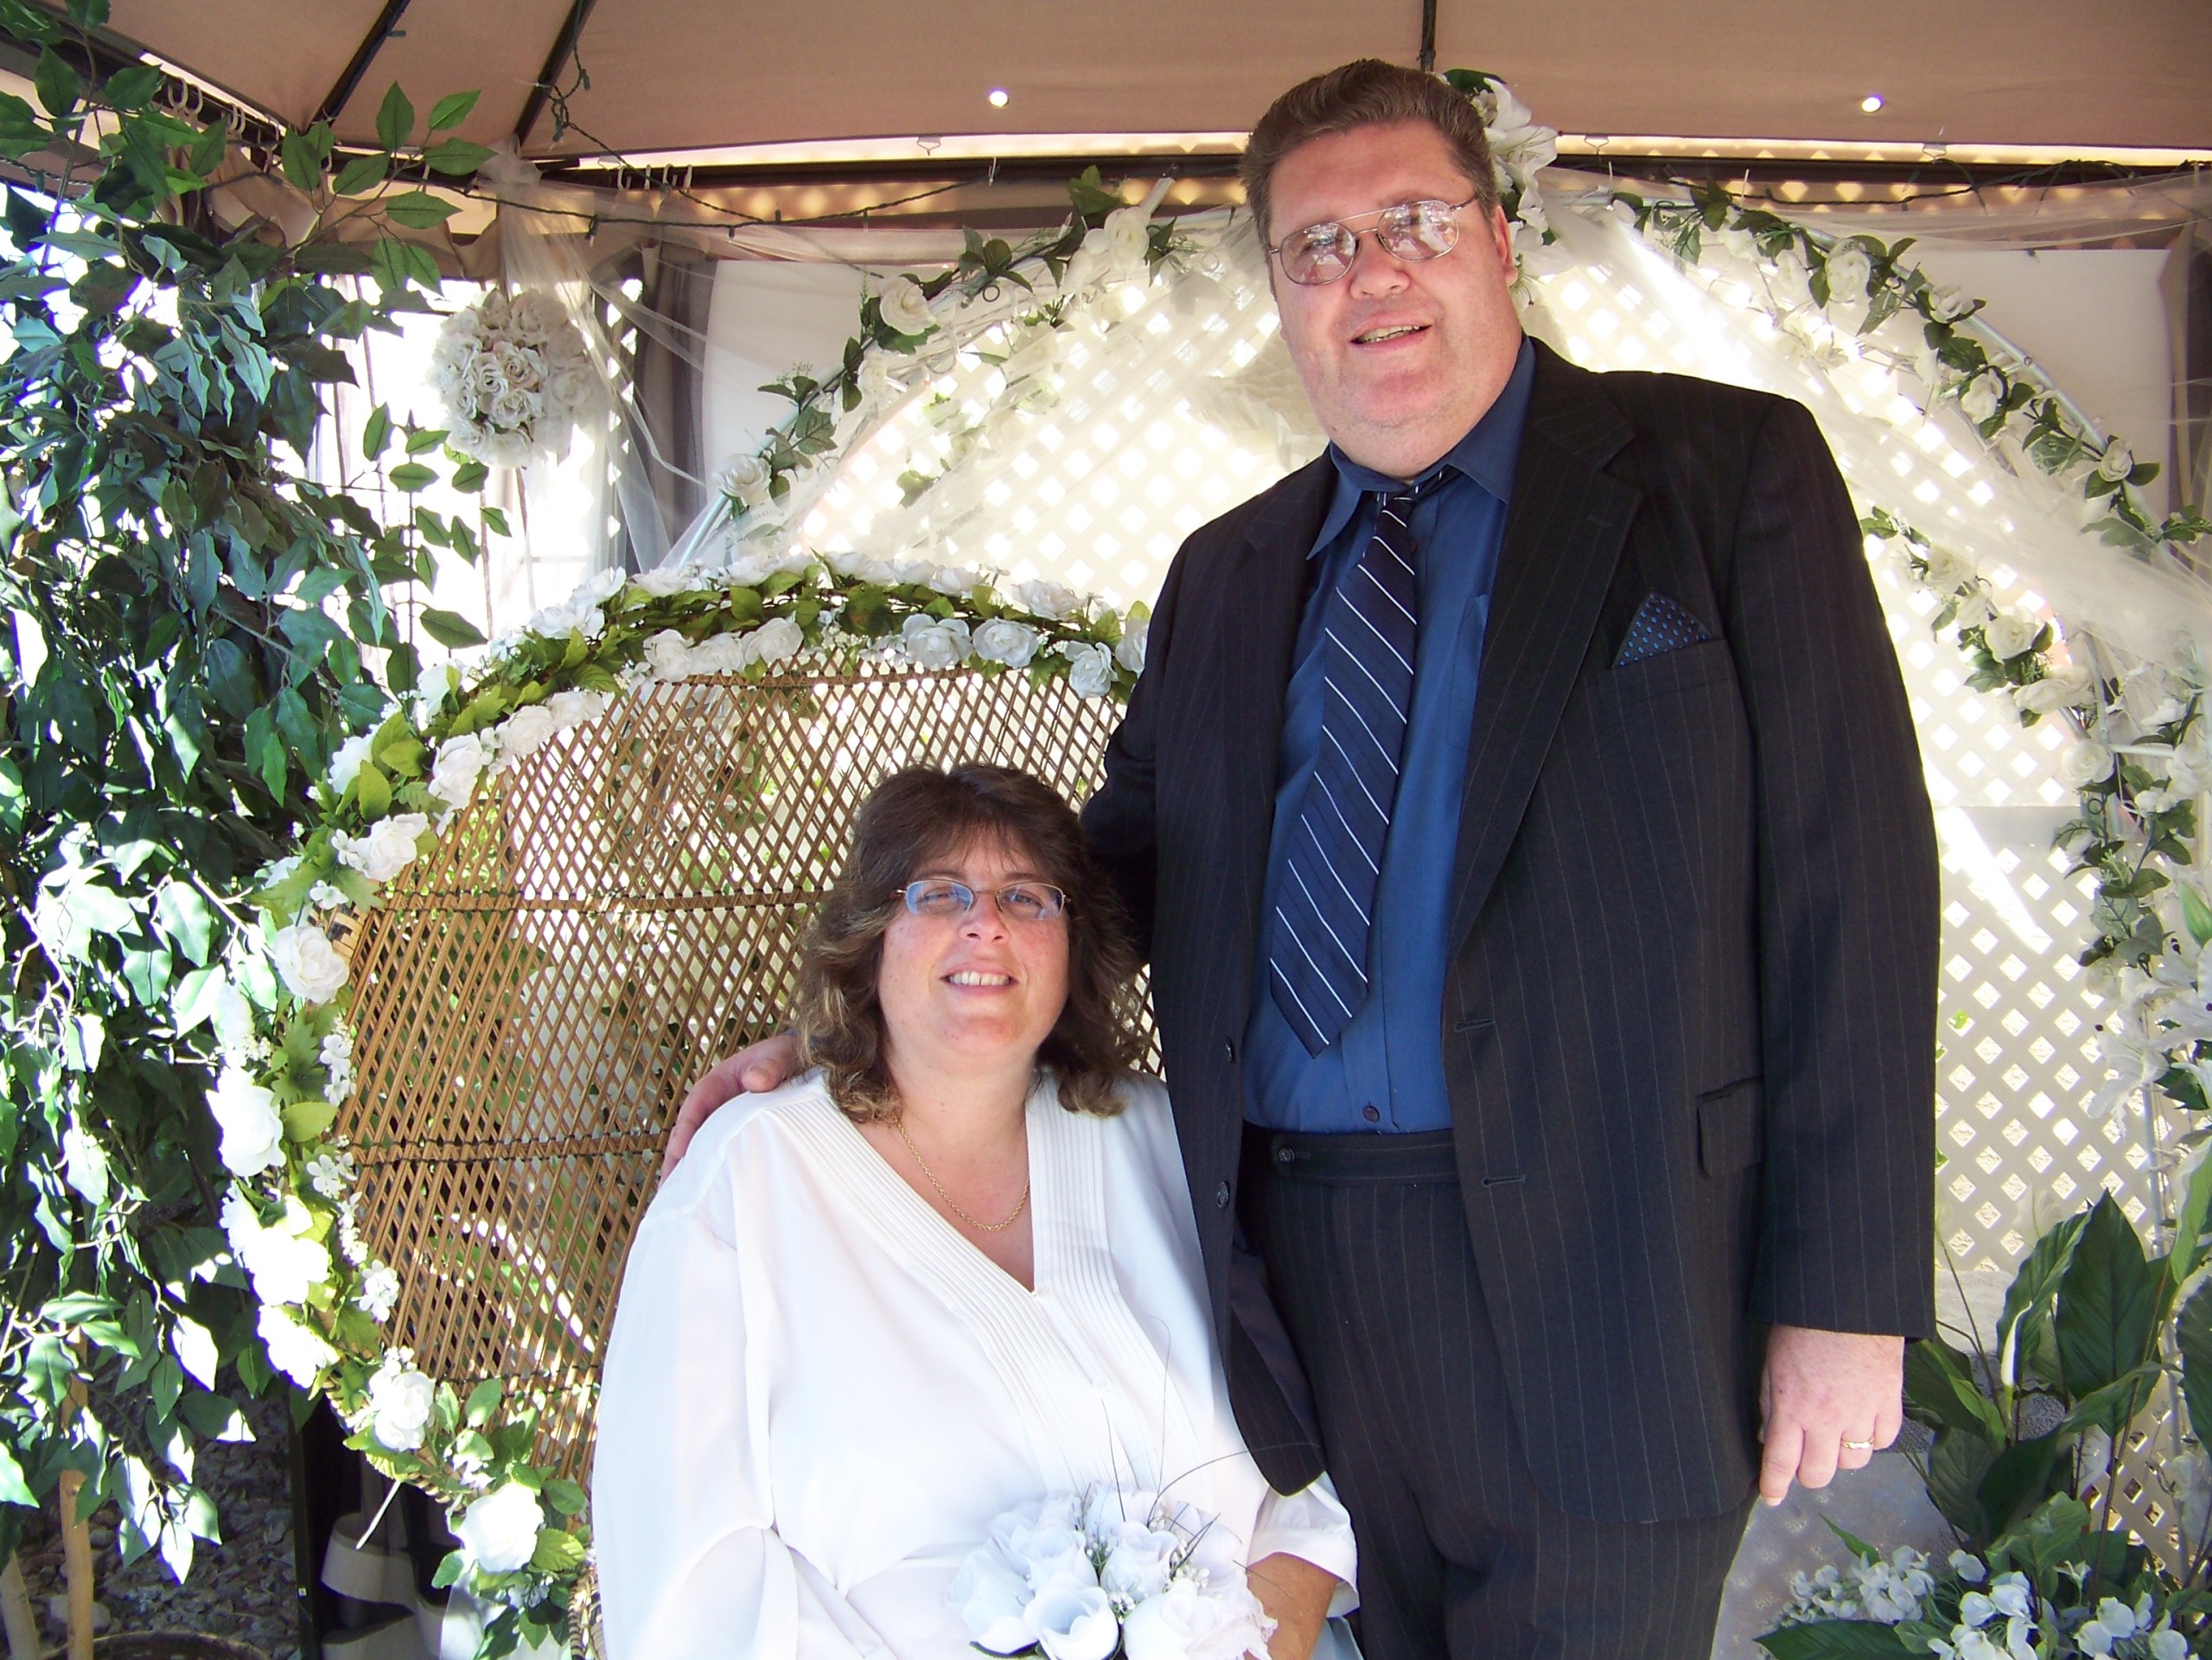 John & Sharon's Wedding Picture,
	Las Vegas, October 5, 2008